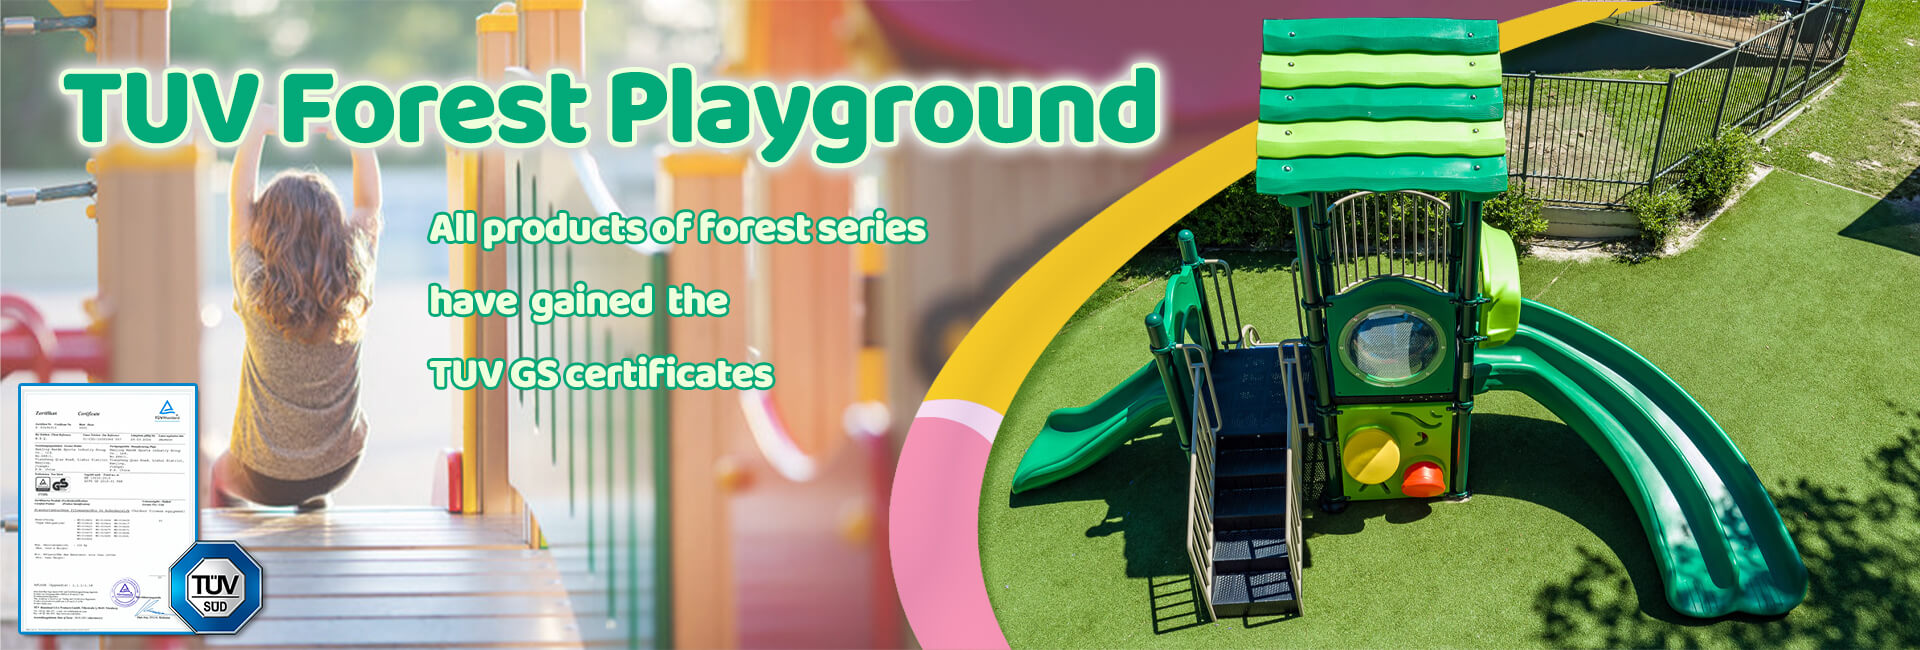 TUV Forest playground